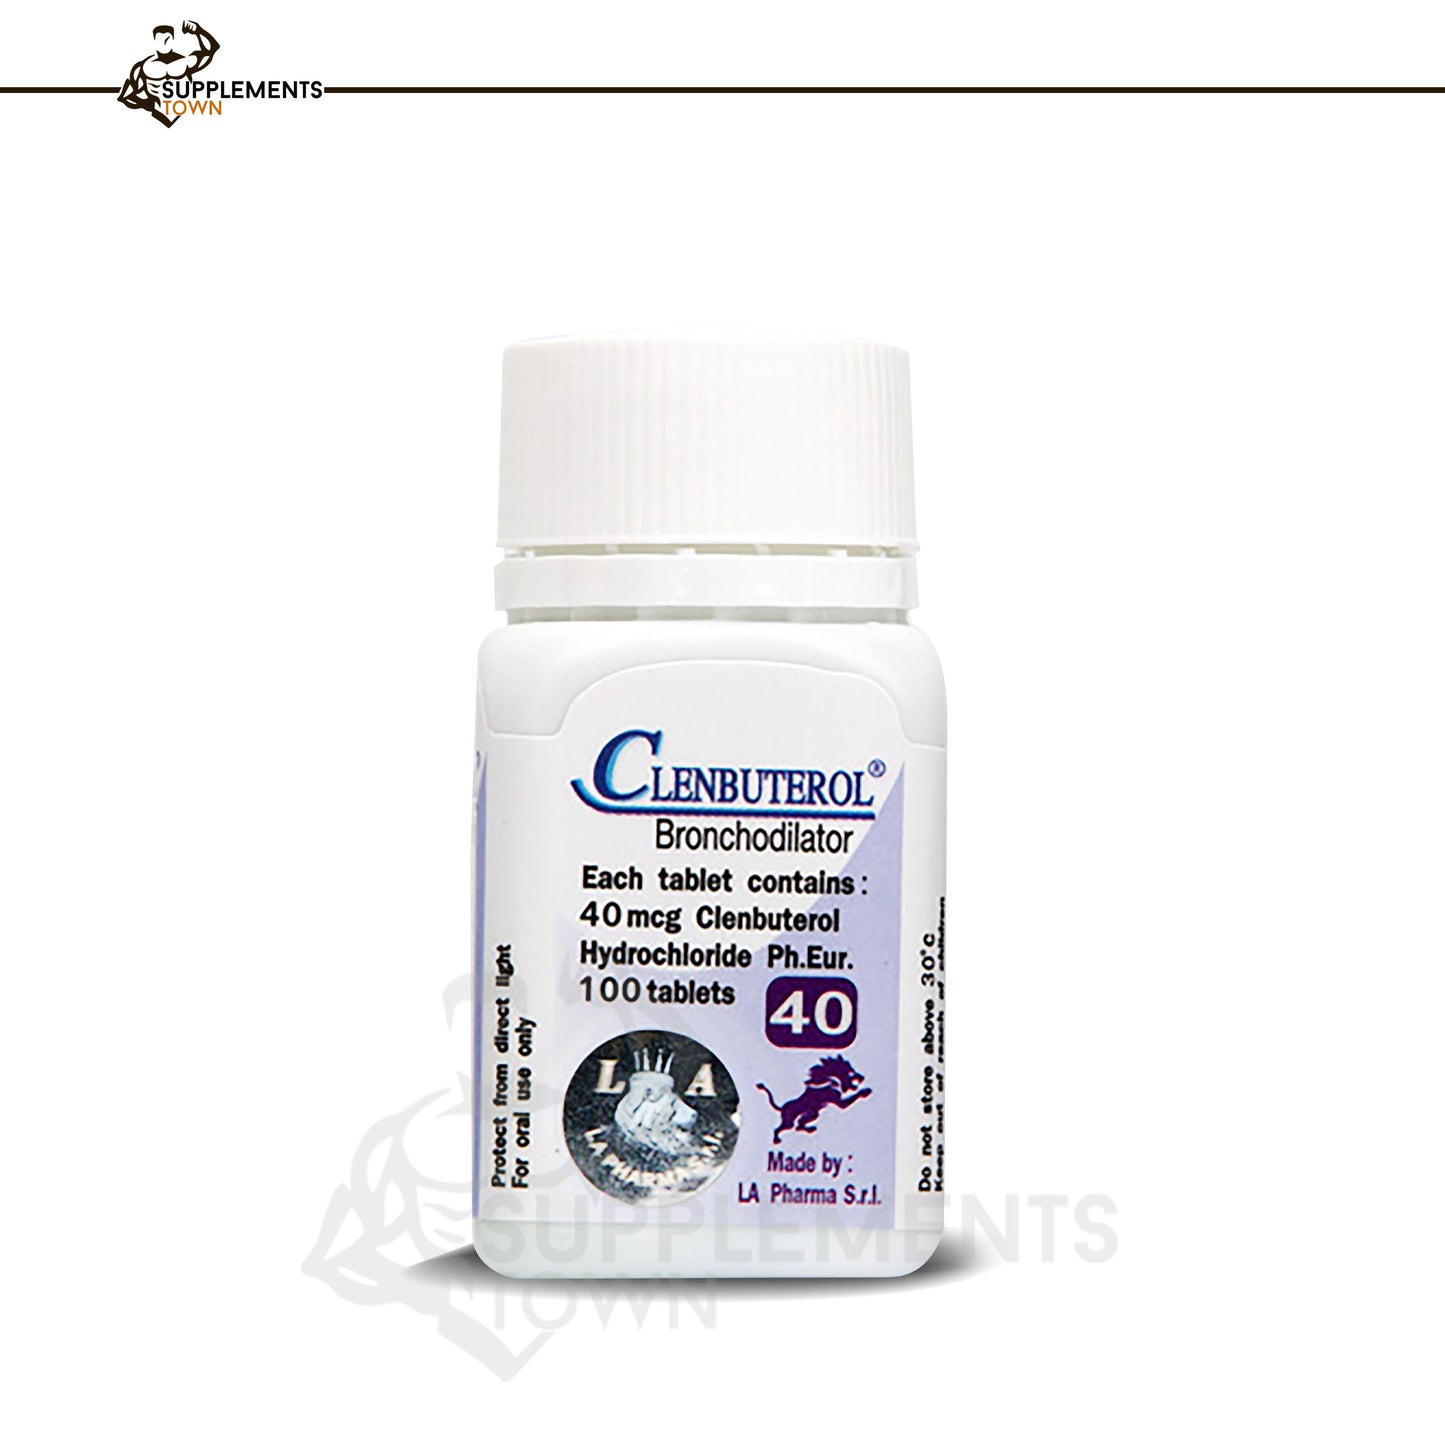 Clenbuterol 40 mcg - LA Pharma - 100 Tablets